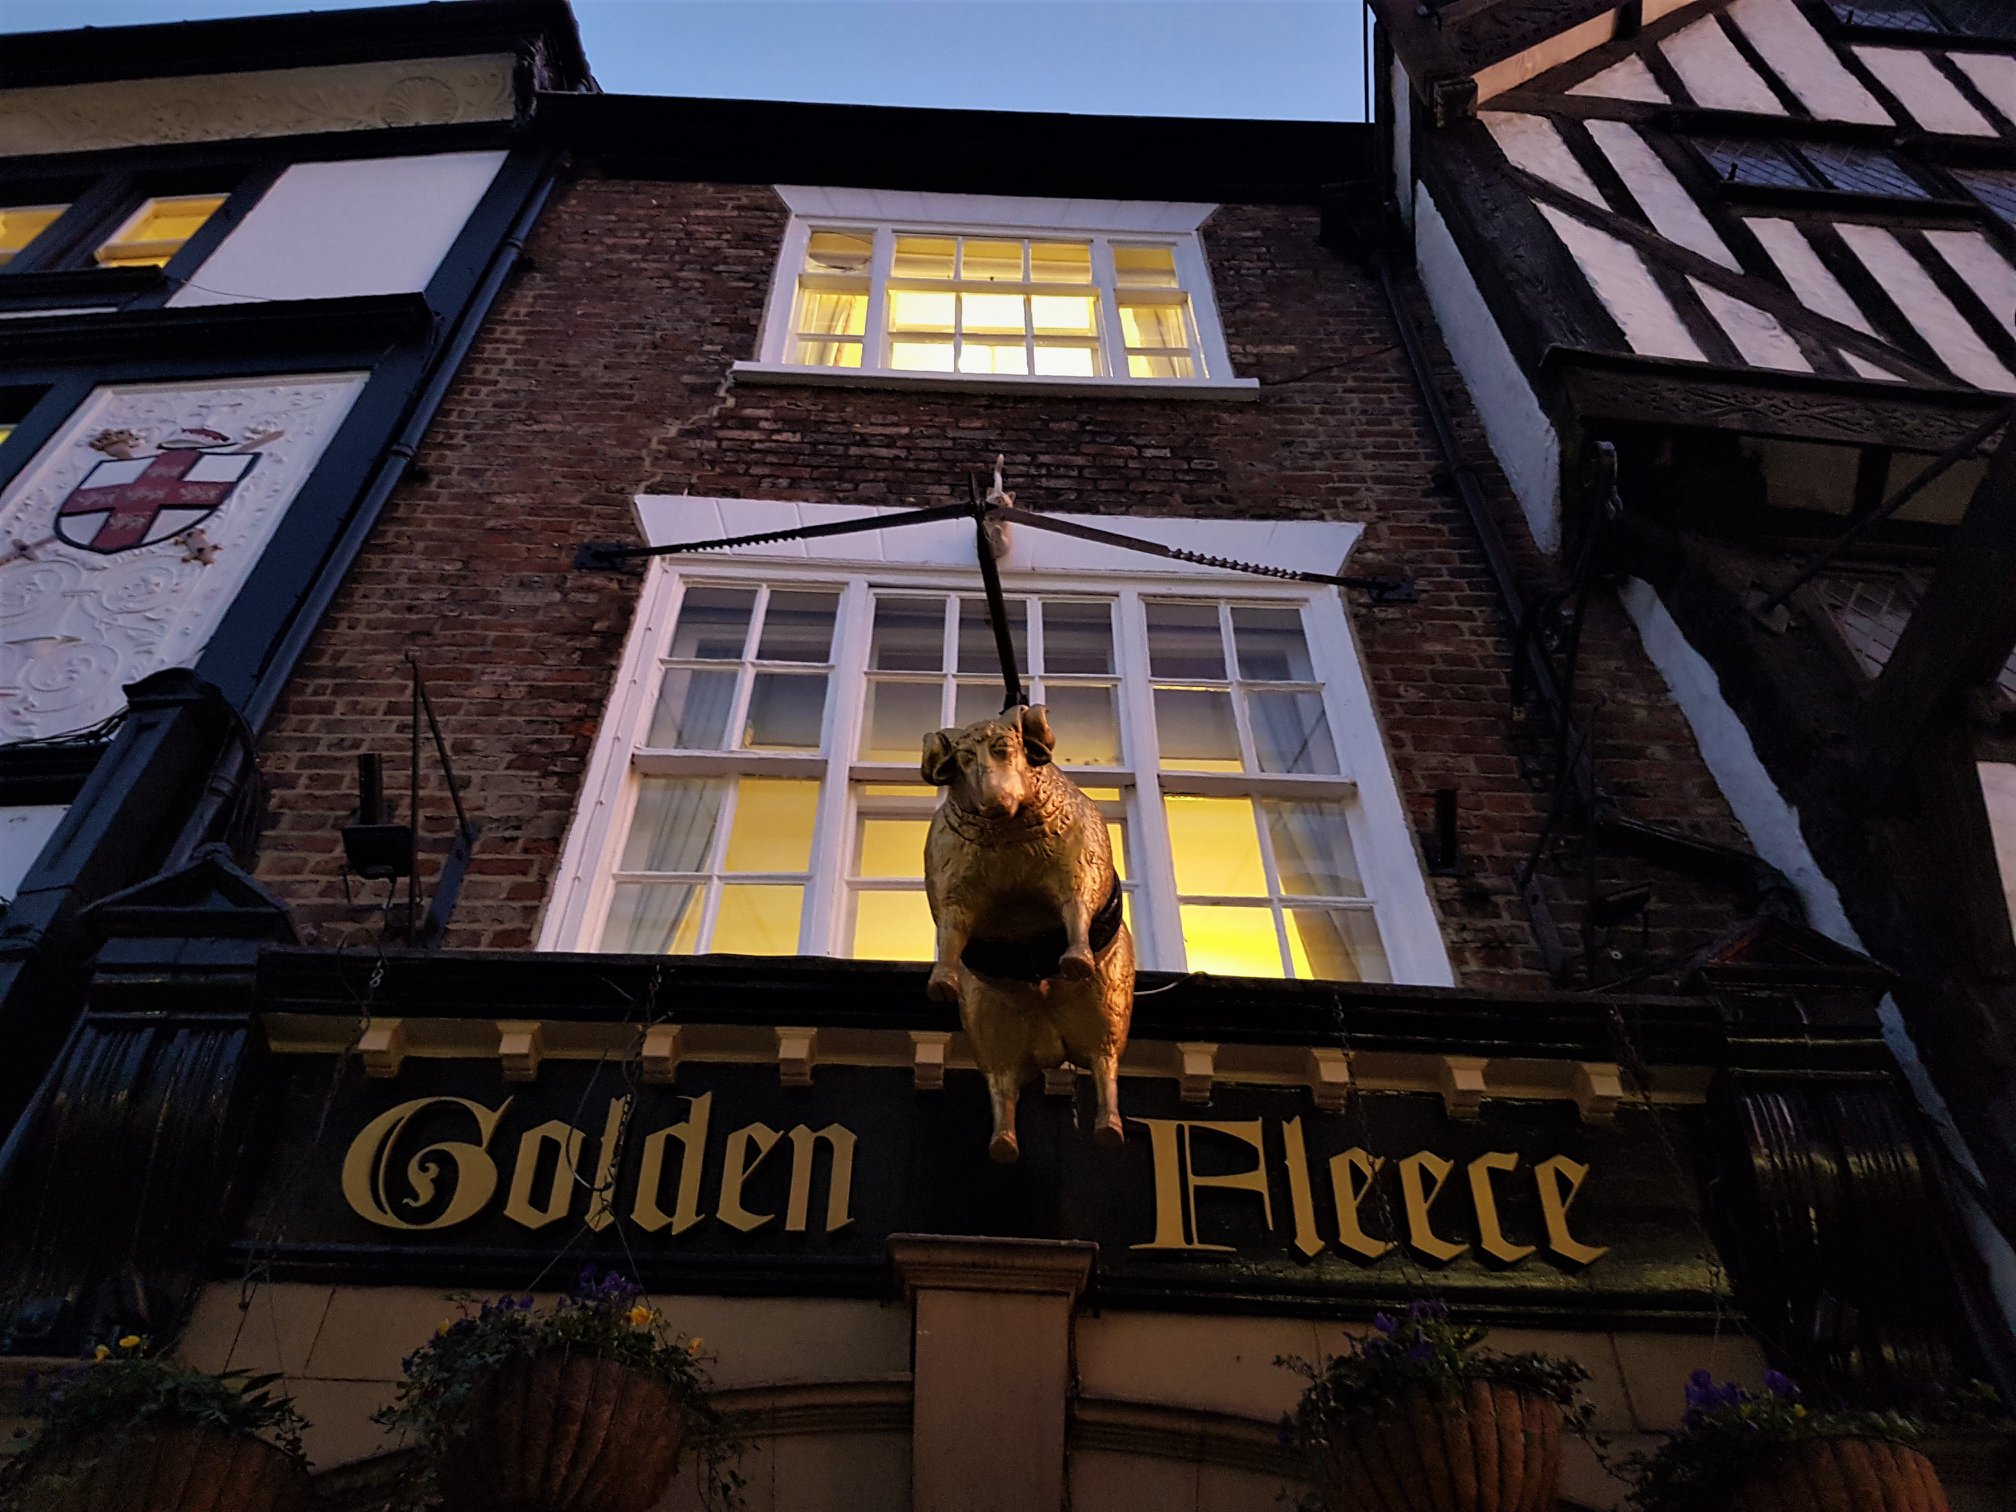 The Golden Fleece – York, UK